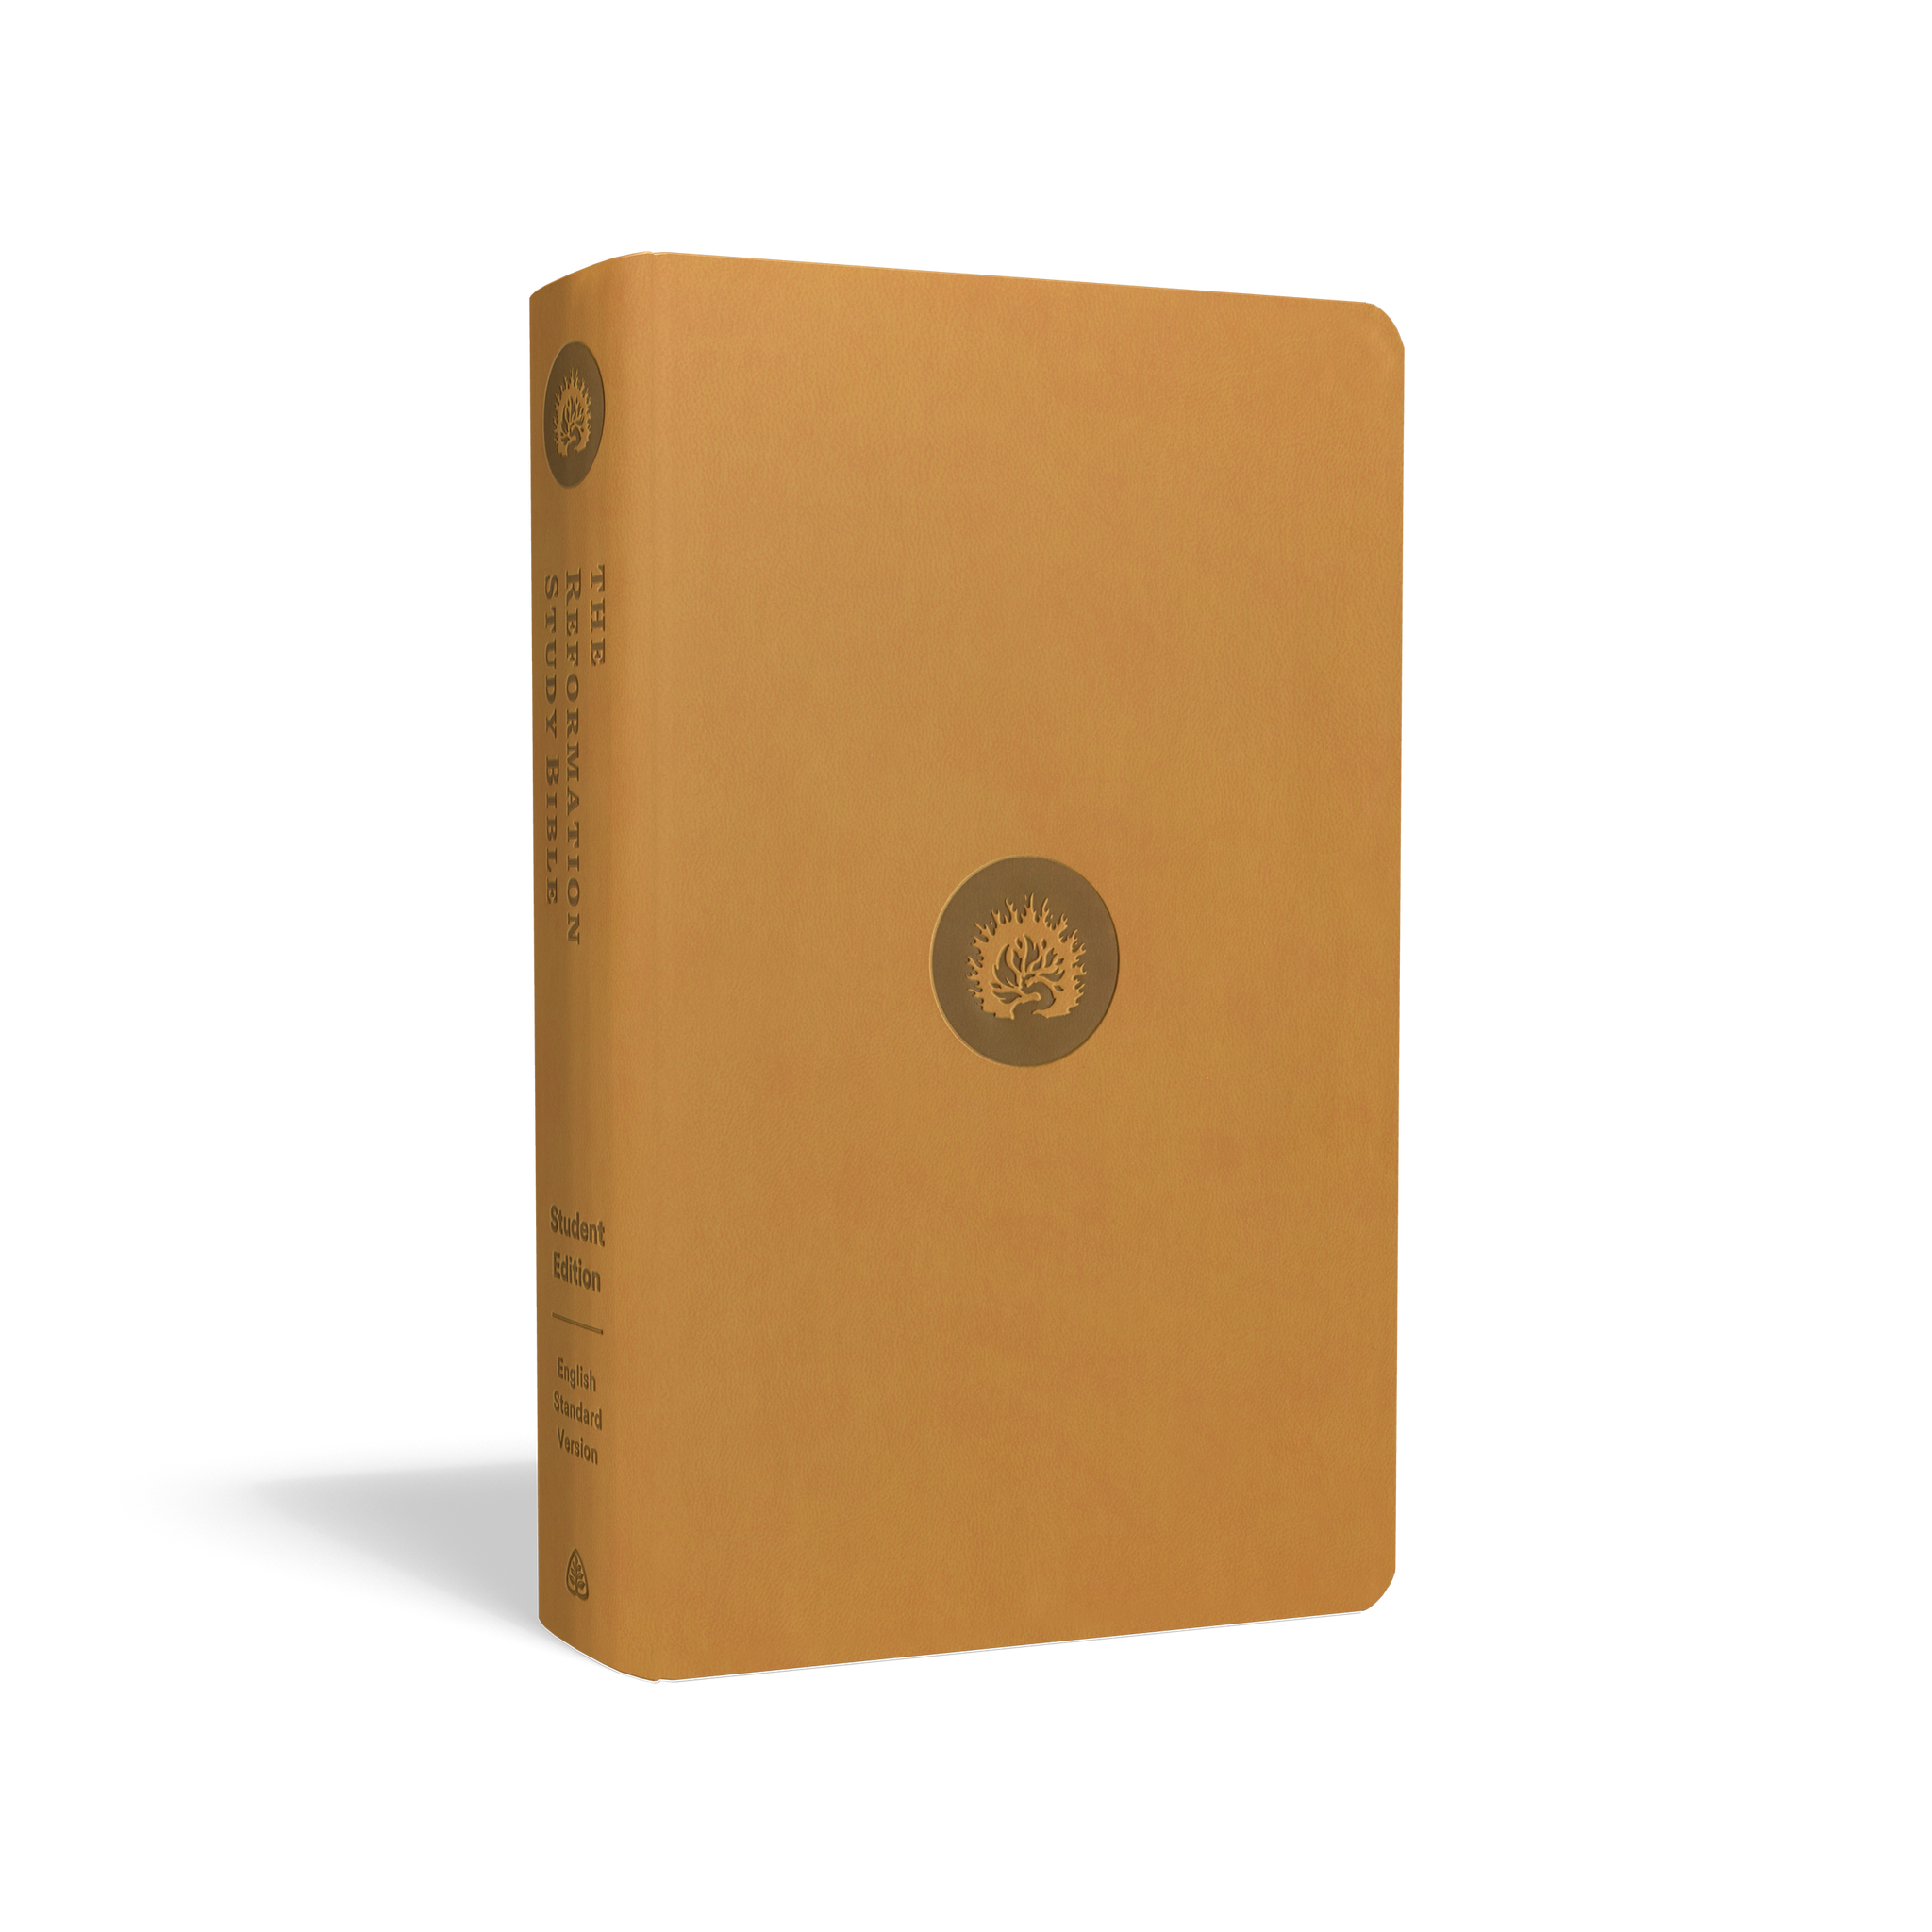 ESV Reformation Study Bible, Student Edition (Leather-like, Marigold)